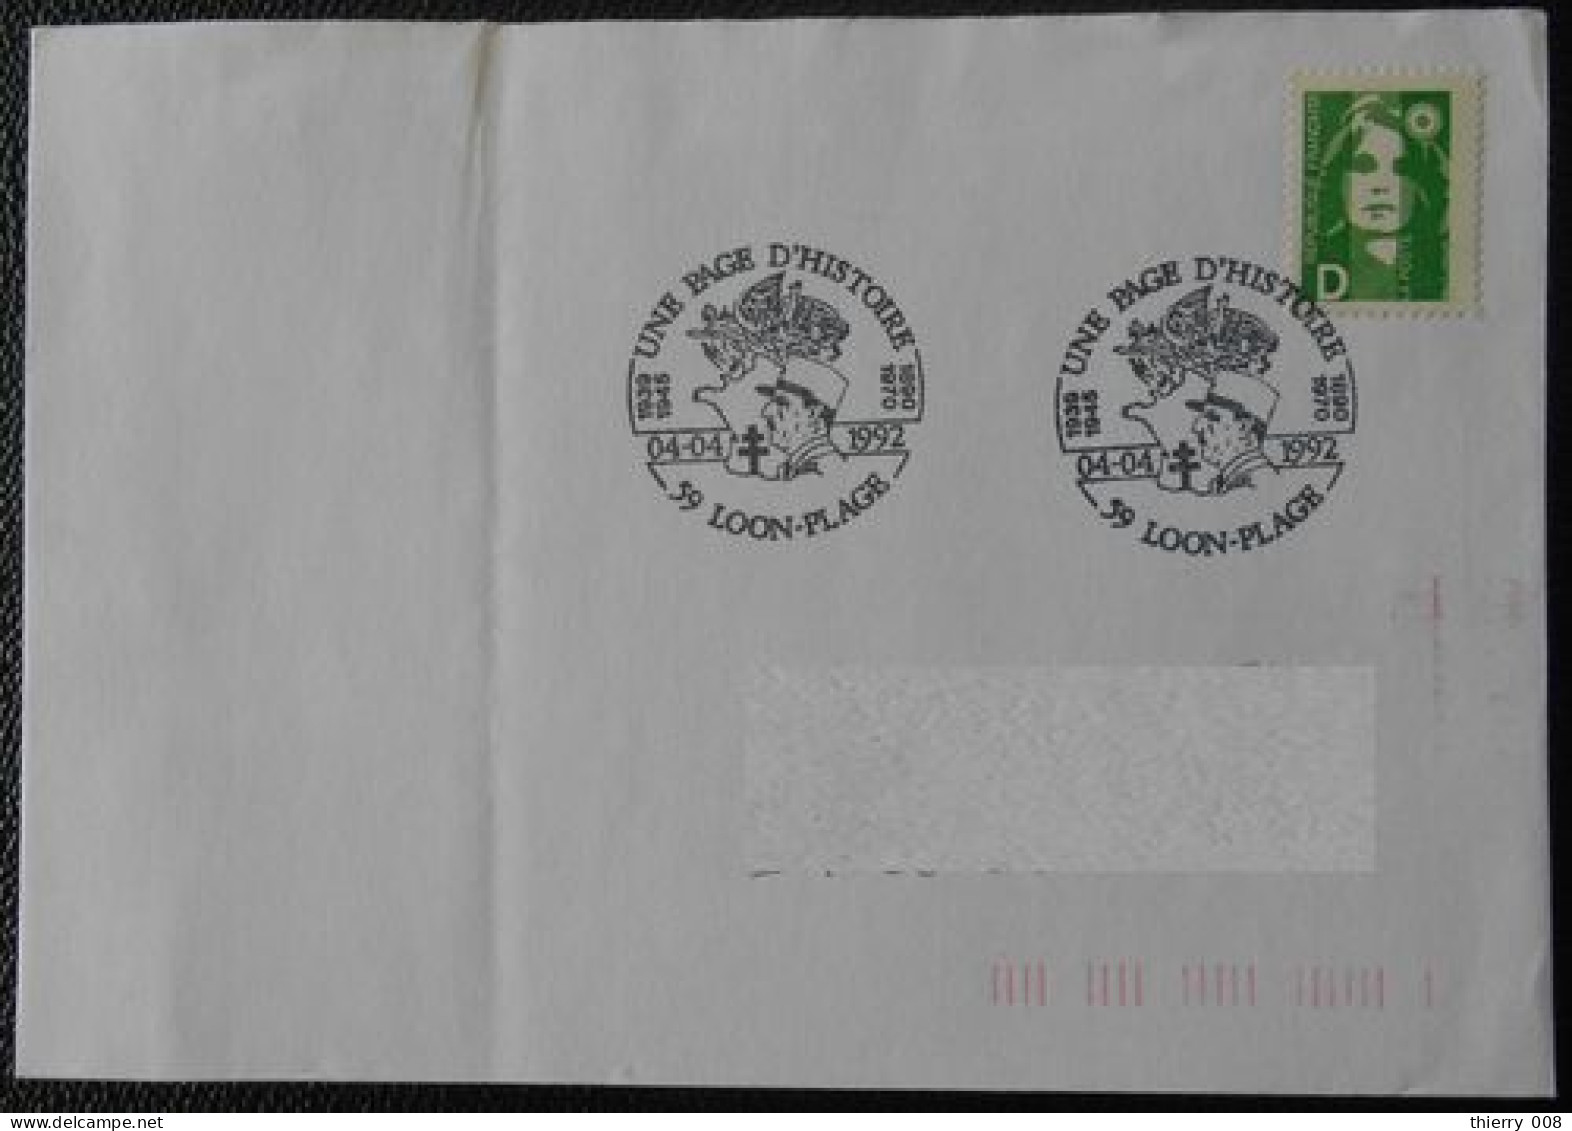 L092 Cachet Temporaire Loon Plage 59 Nord Une Page D'Histoire 4 Avril 1992 - Commemorative Postmarks